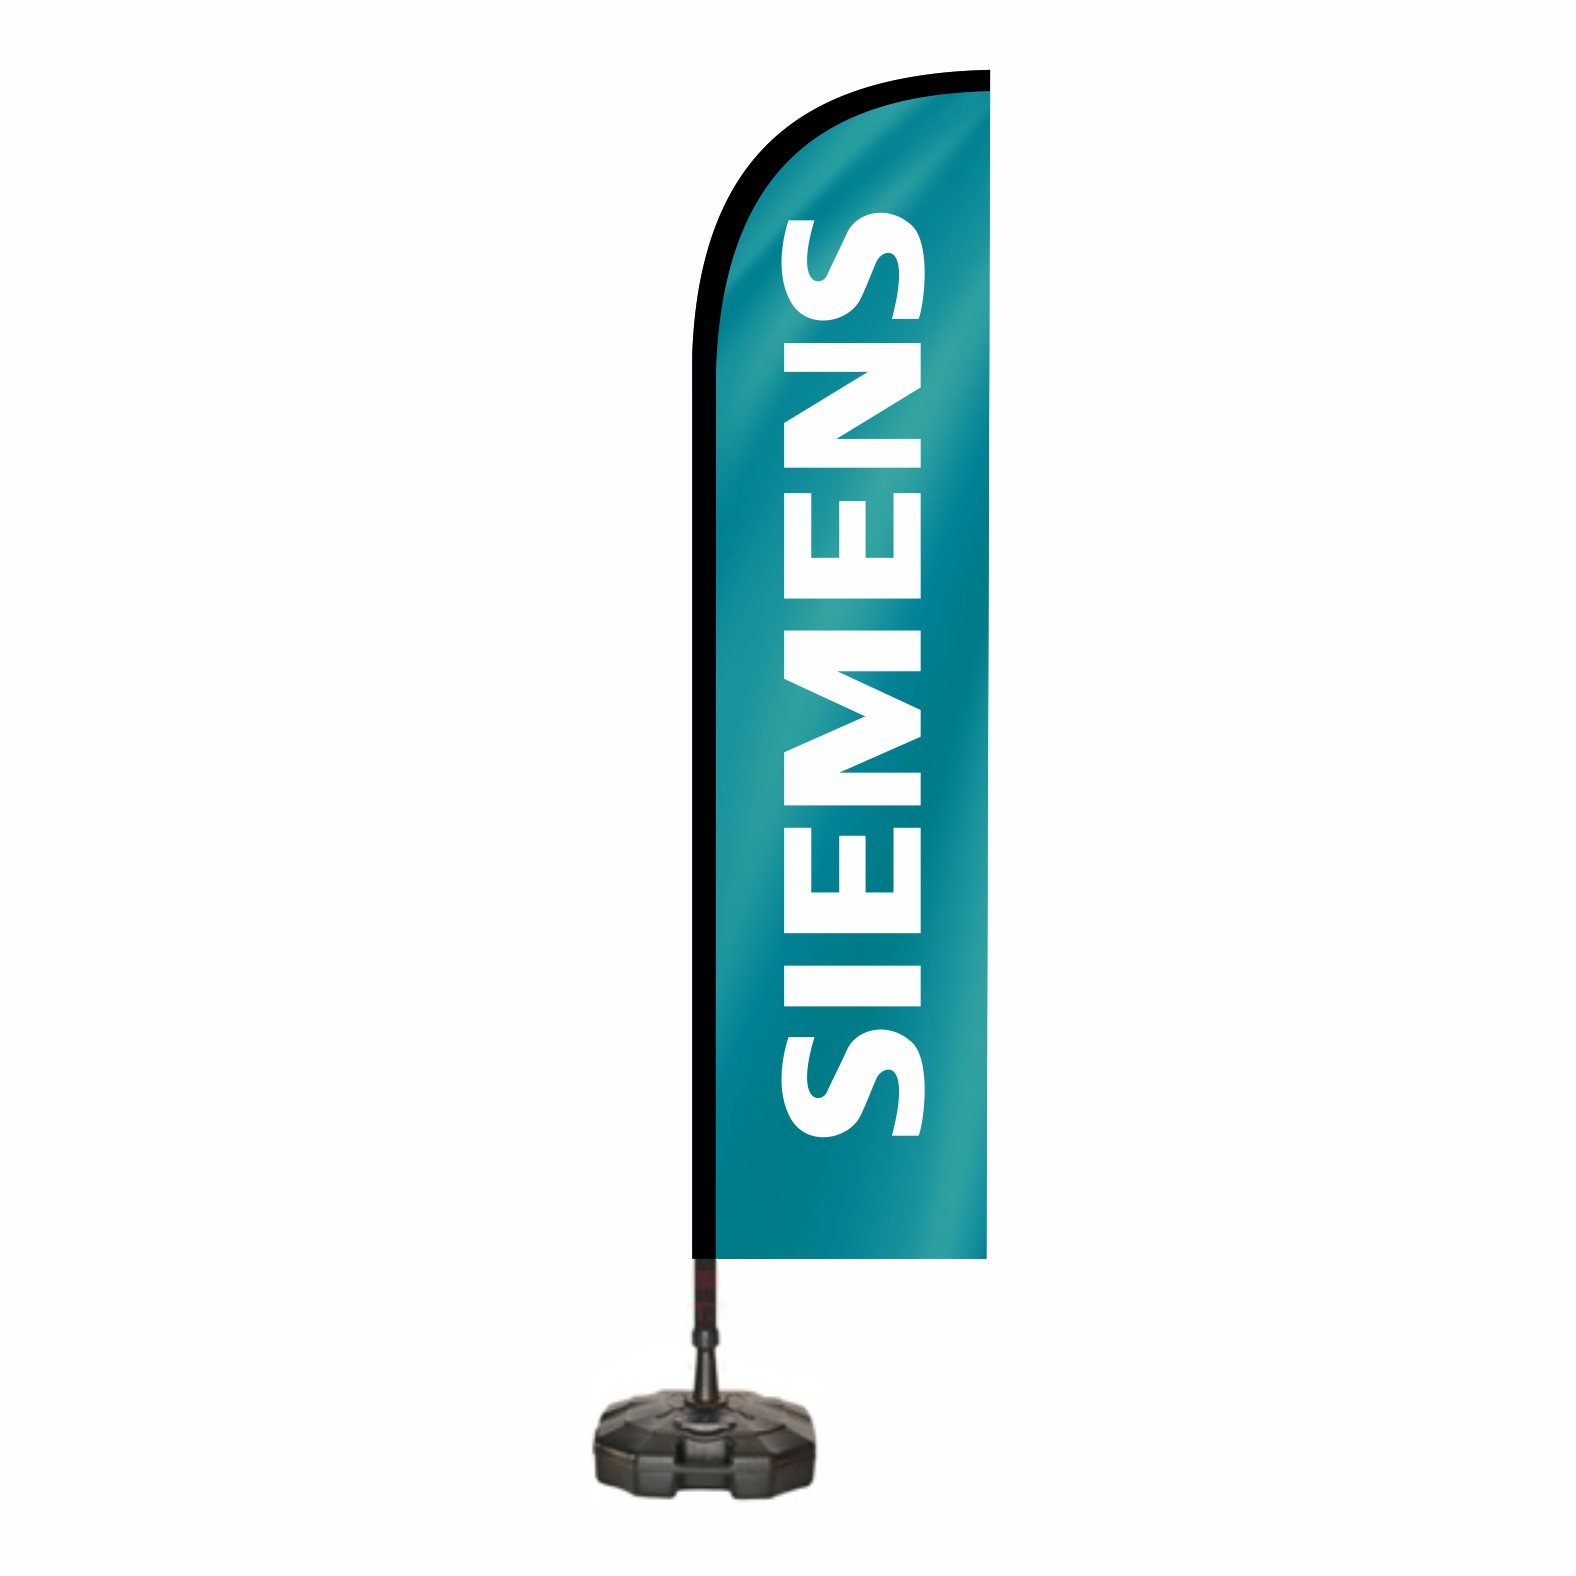 Siemens Yelken Bayraklar Nerede Yaptrlr